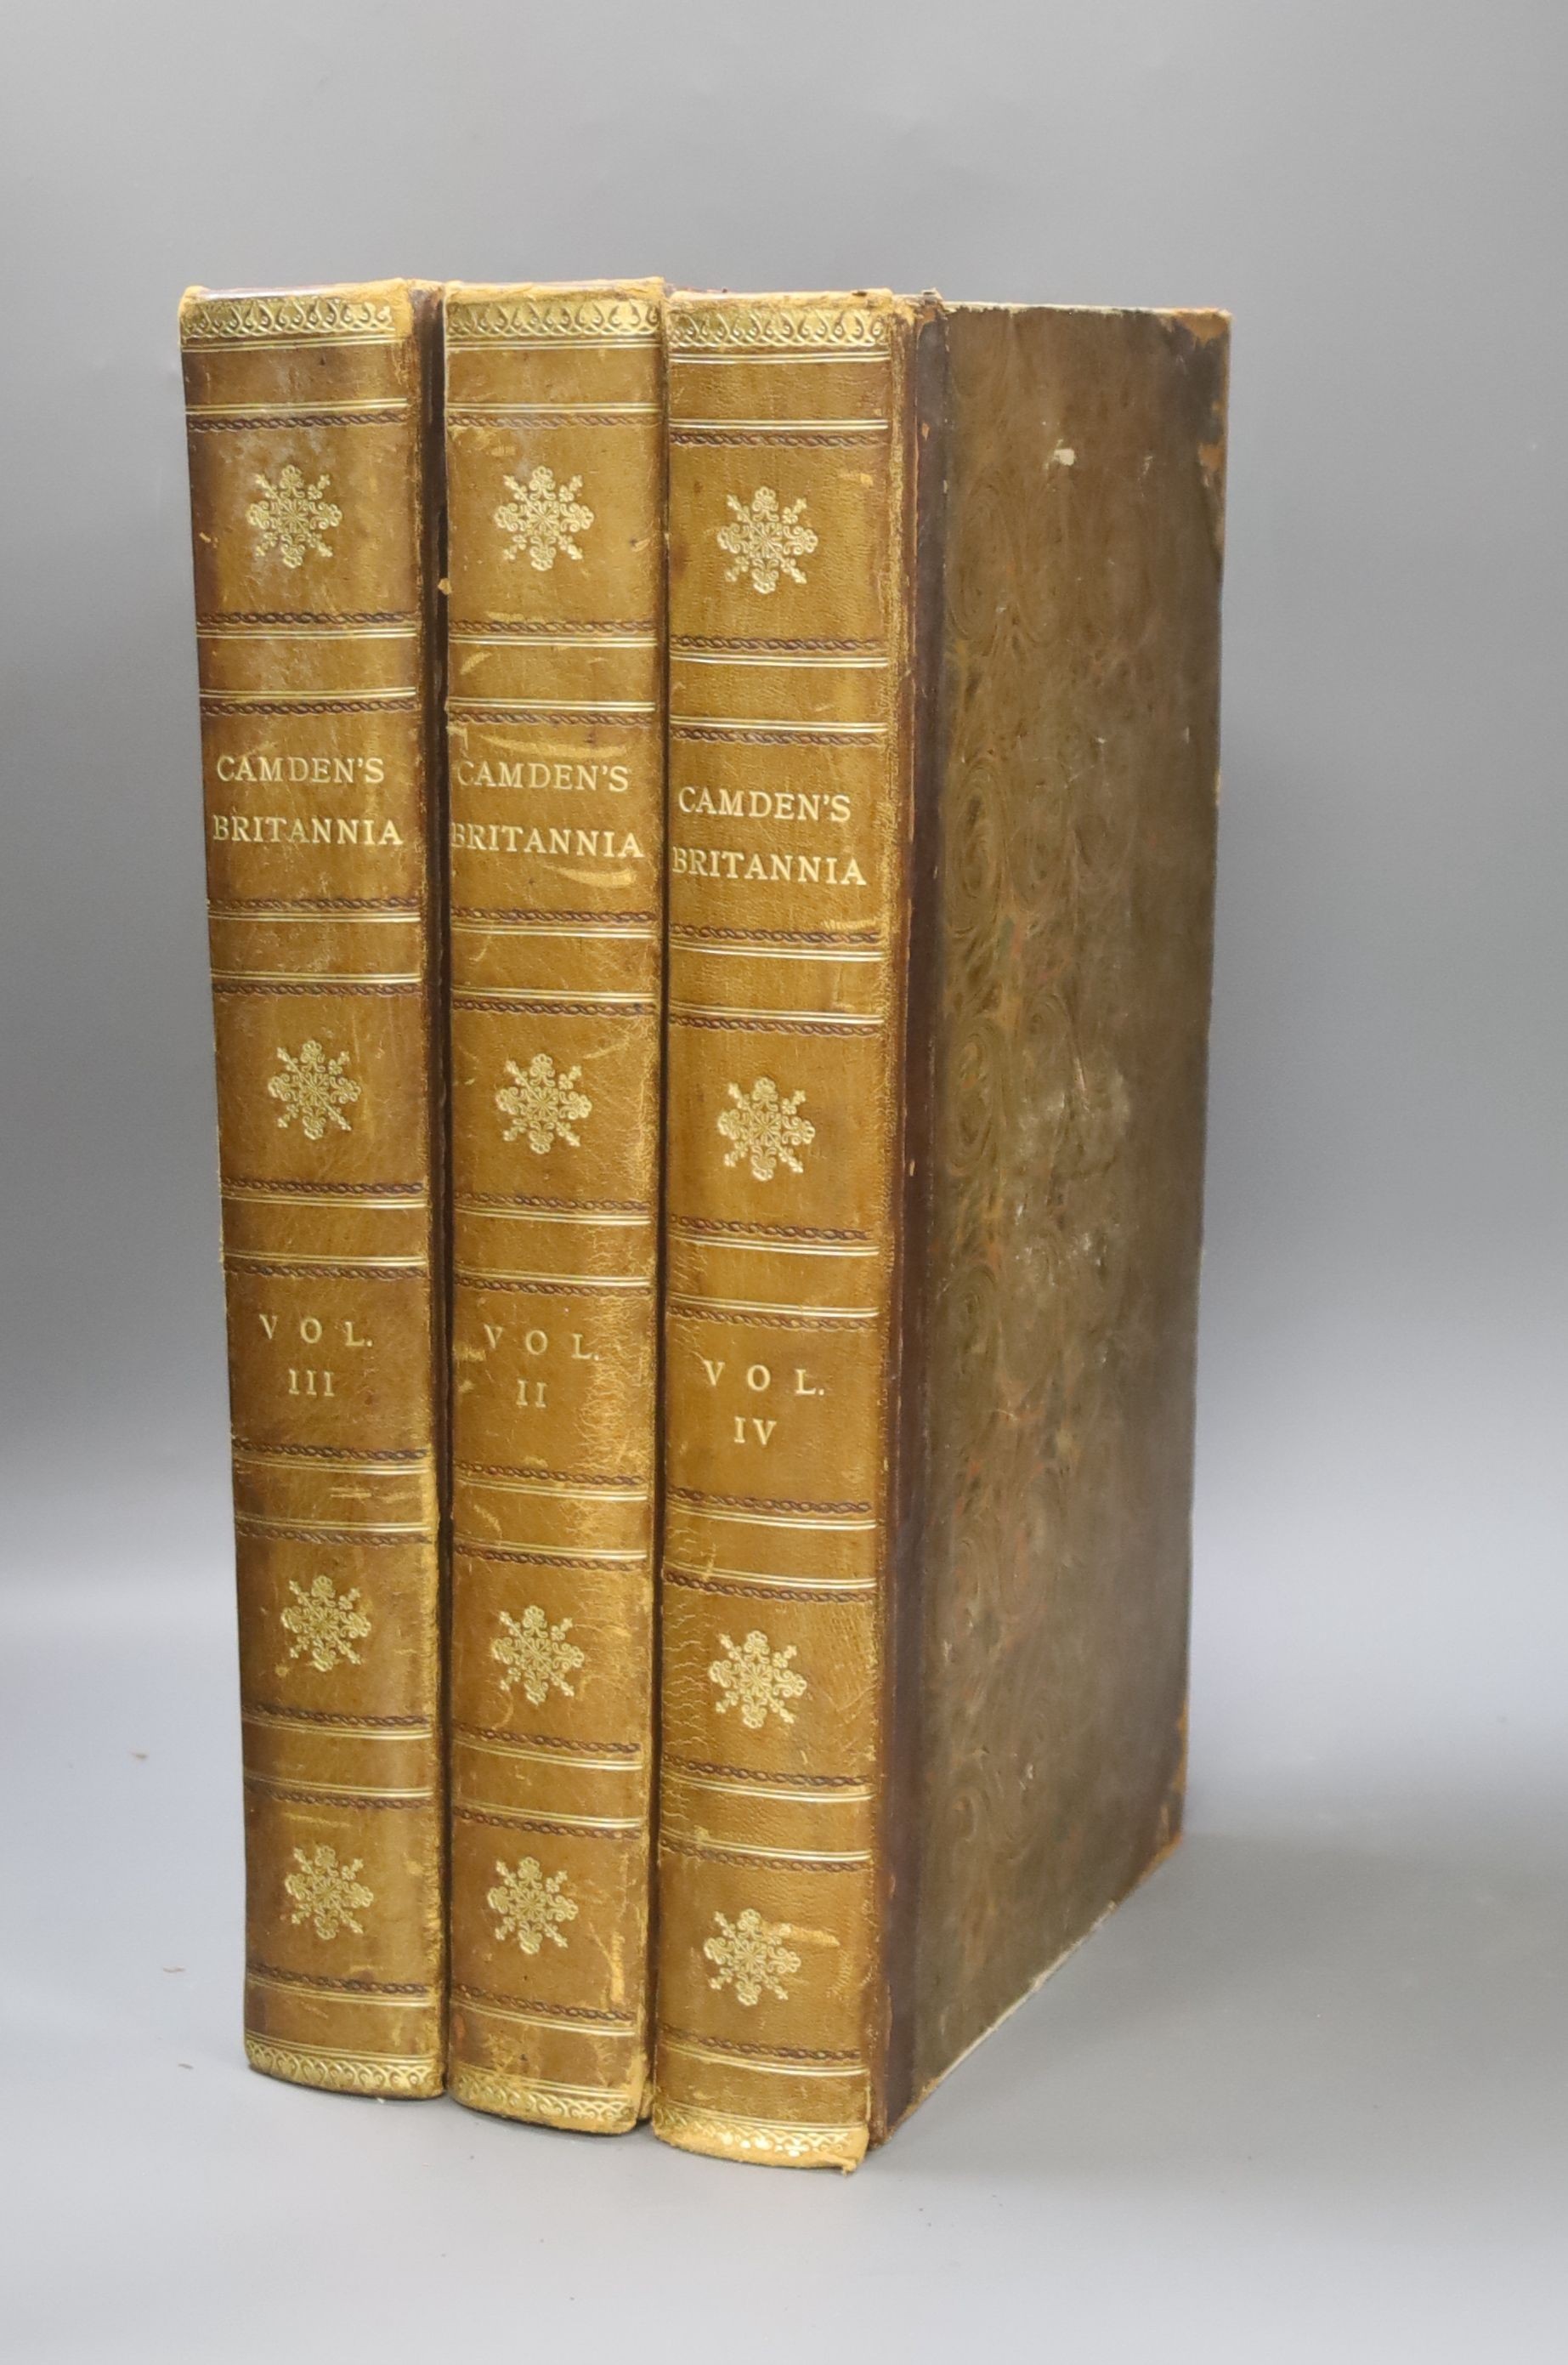 Camden, William - Brittania: or, a Chronographical description of ......England, Scotland and Ireland, 2nd edition, vols 2, 3 and 4 only, of 4, folio, half calf, ex libris